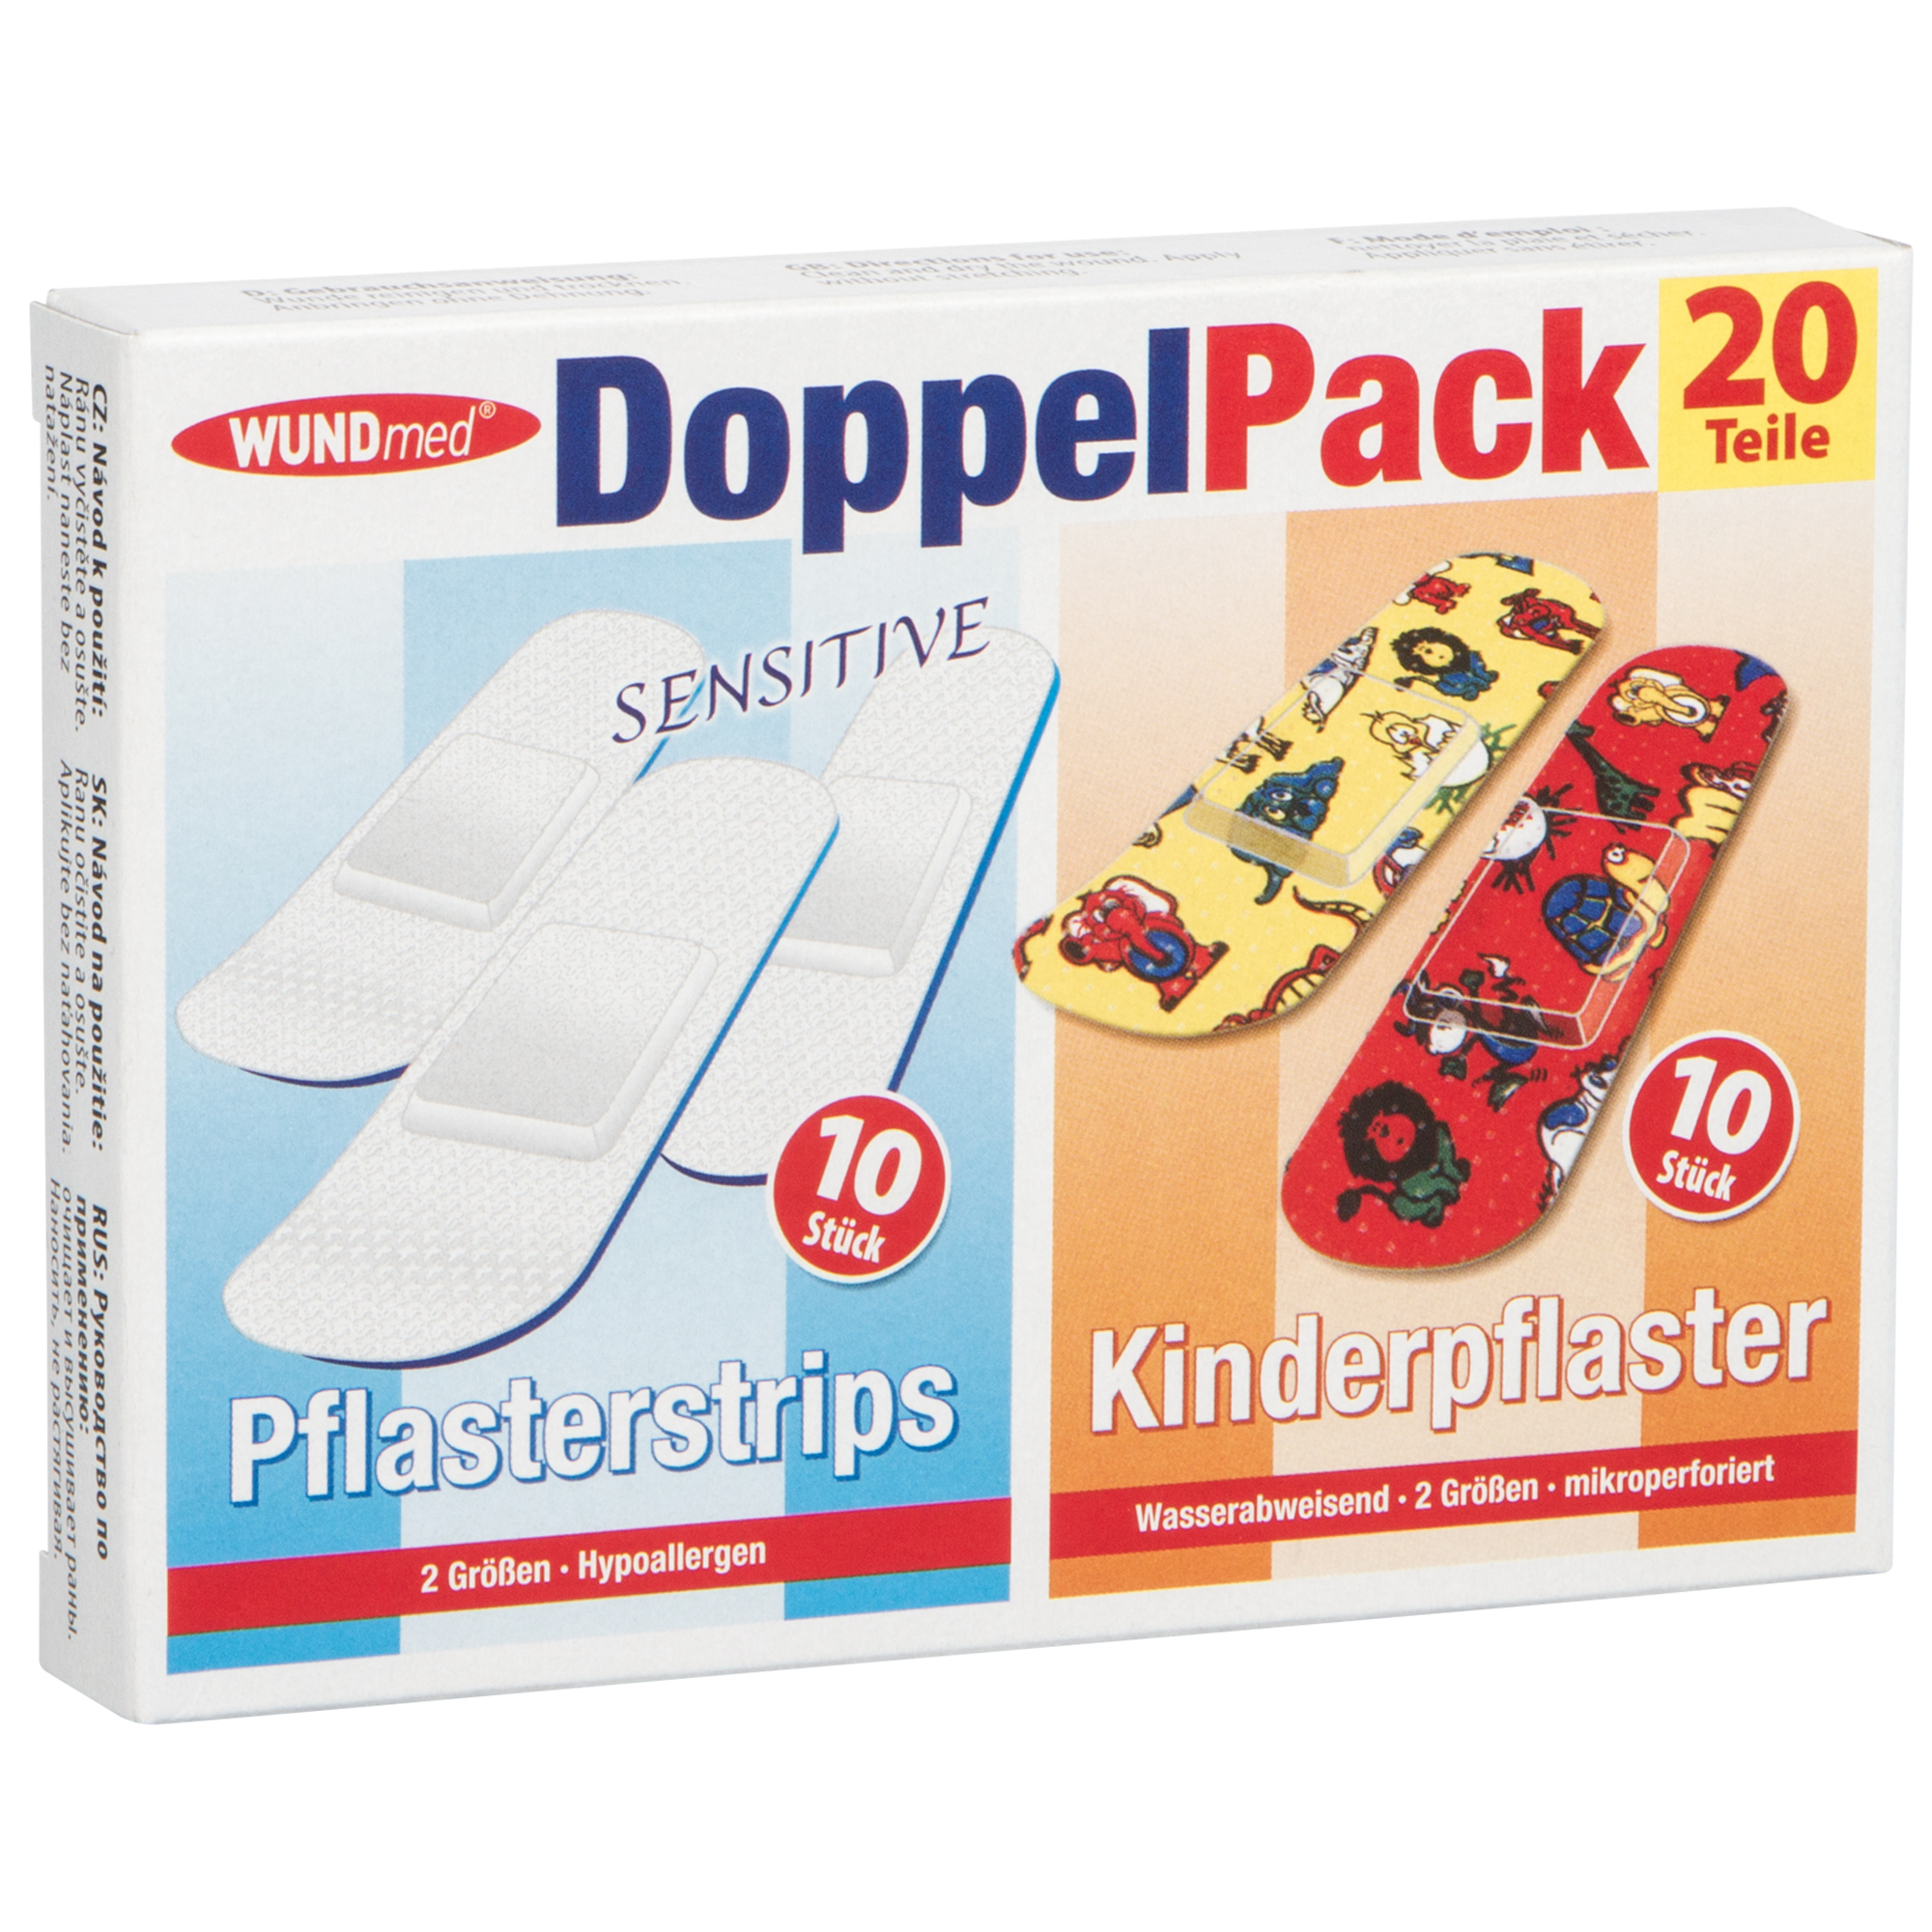 WUNDmed® Doppelpack 20-teilig Pflasterstrips + Kinderpflaster